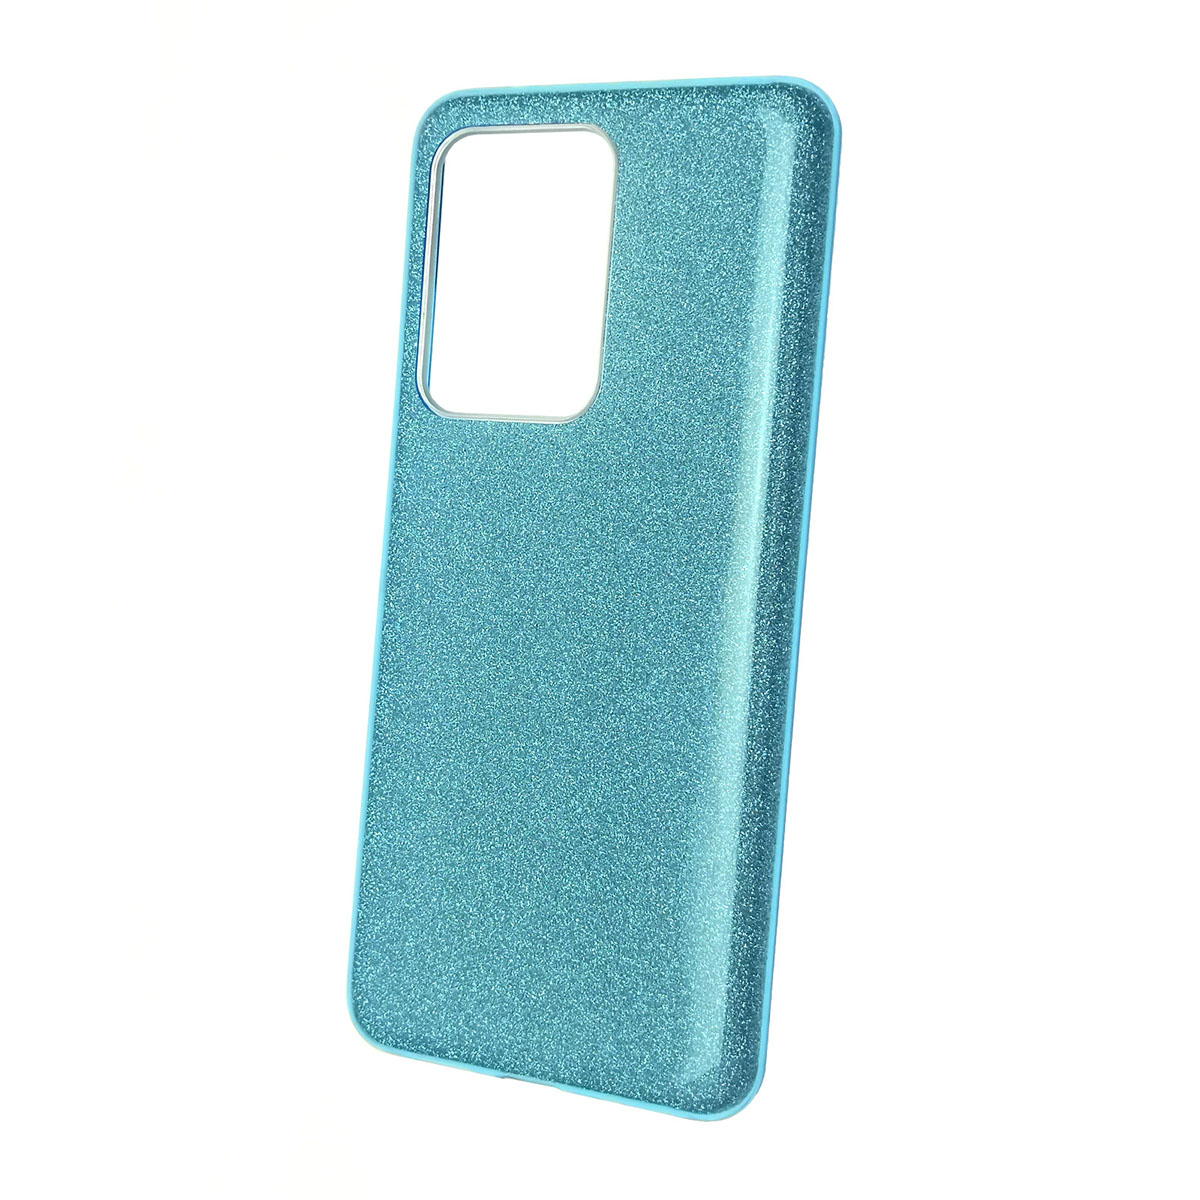 Чехол накладка Shine для SAMSUNG Galaxy S20 Ultra (SM-G988), силикон, блестки, цвет голубой.